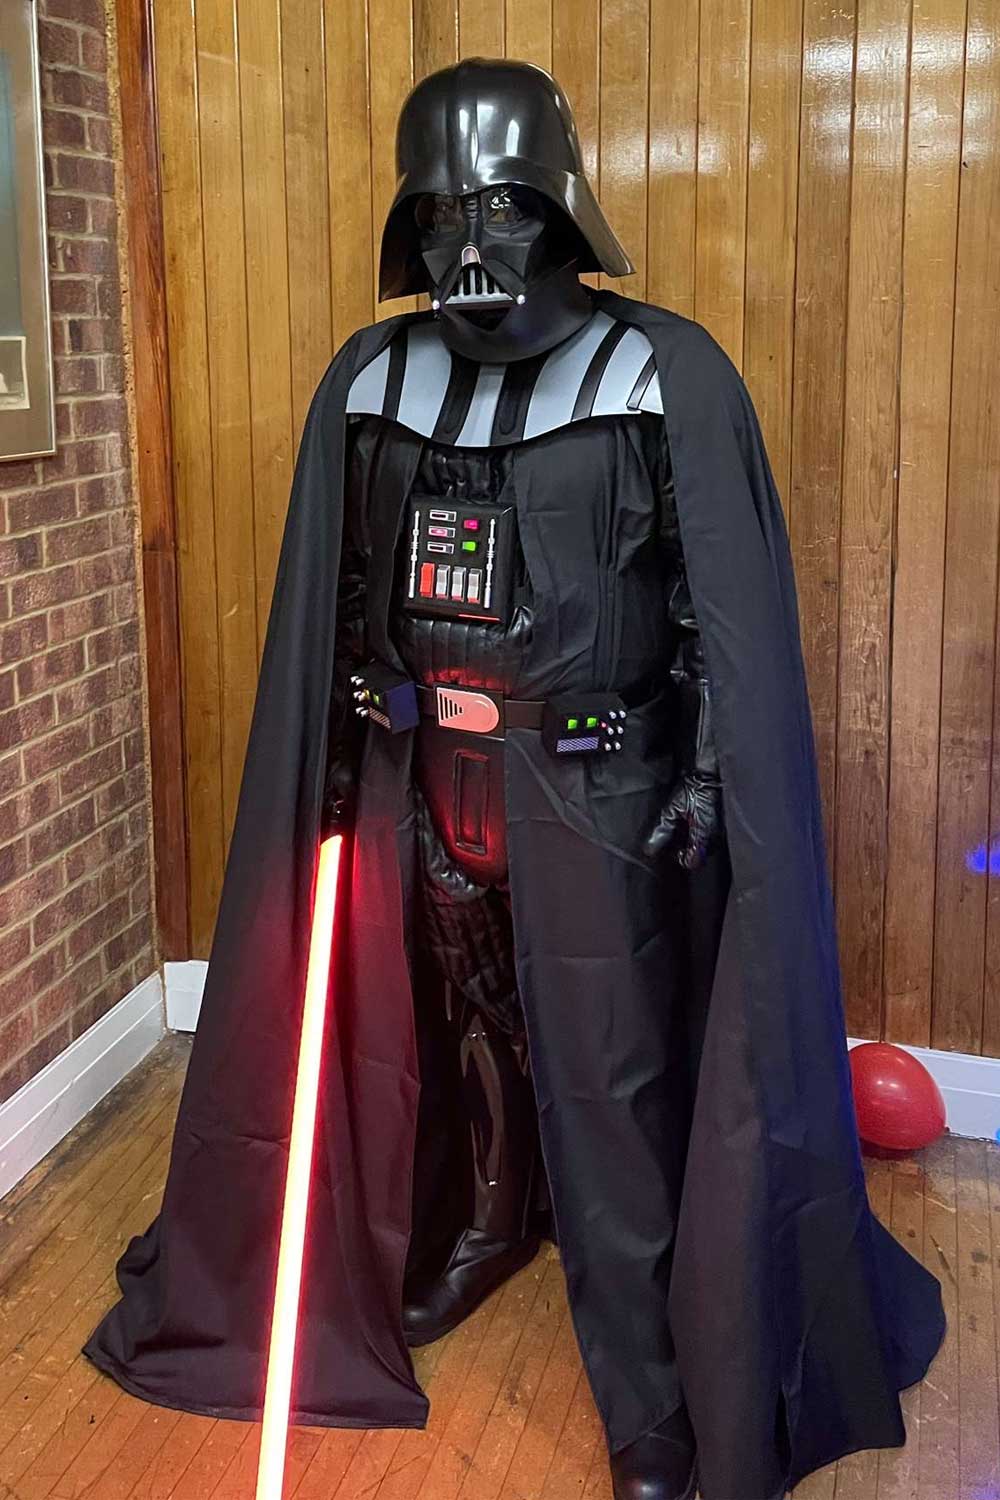 Star Wars Darth Vader costume review